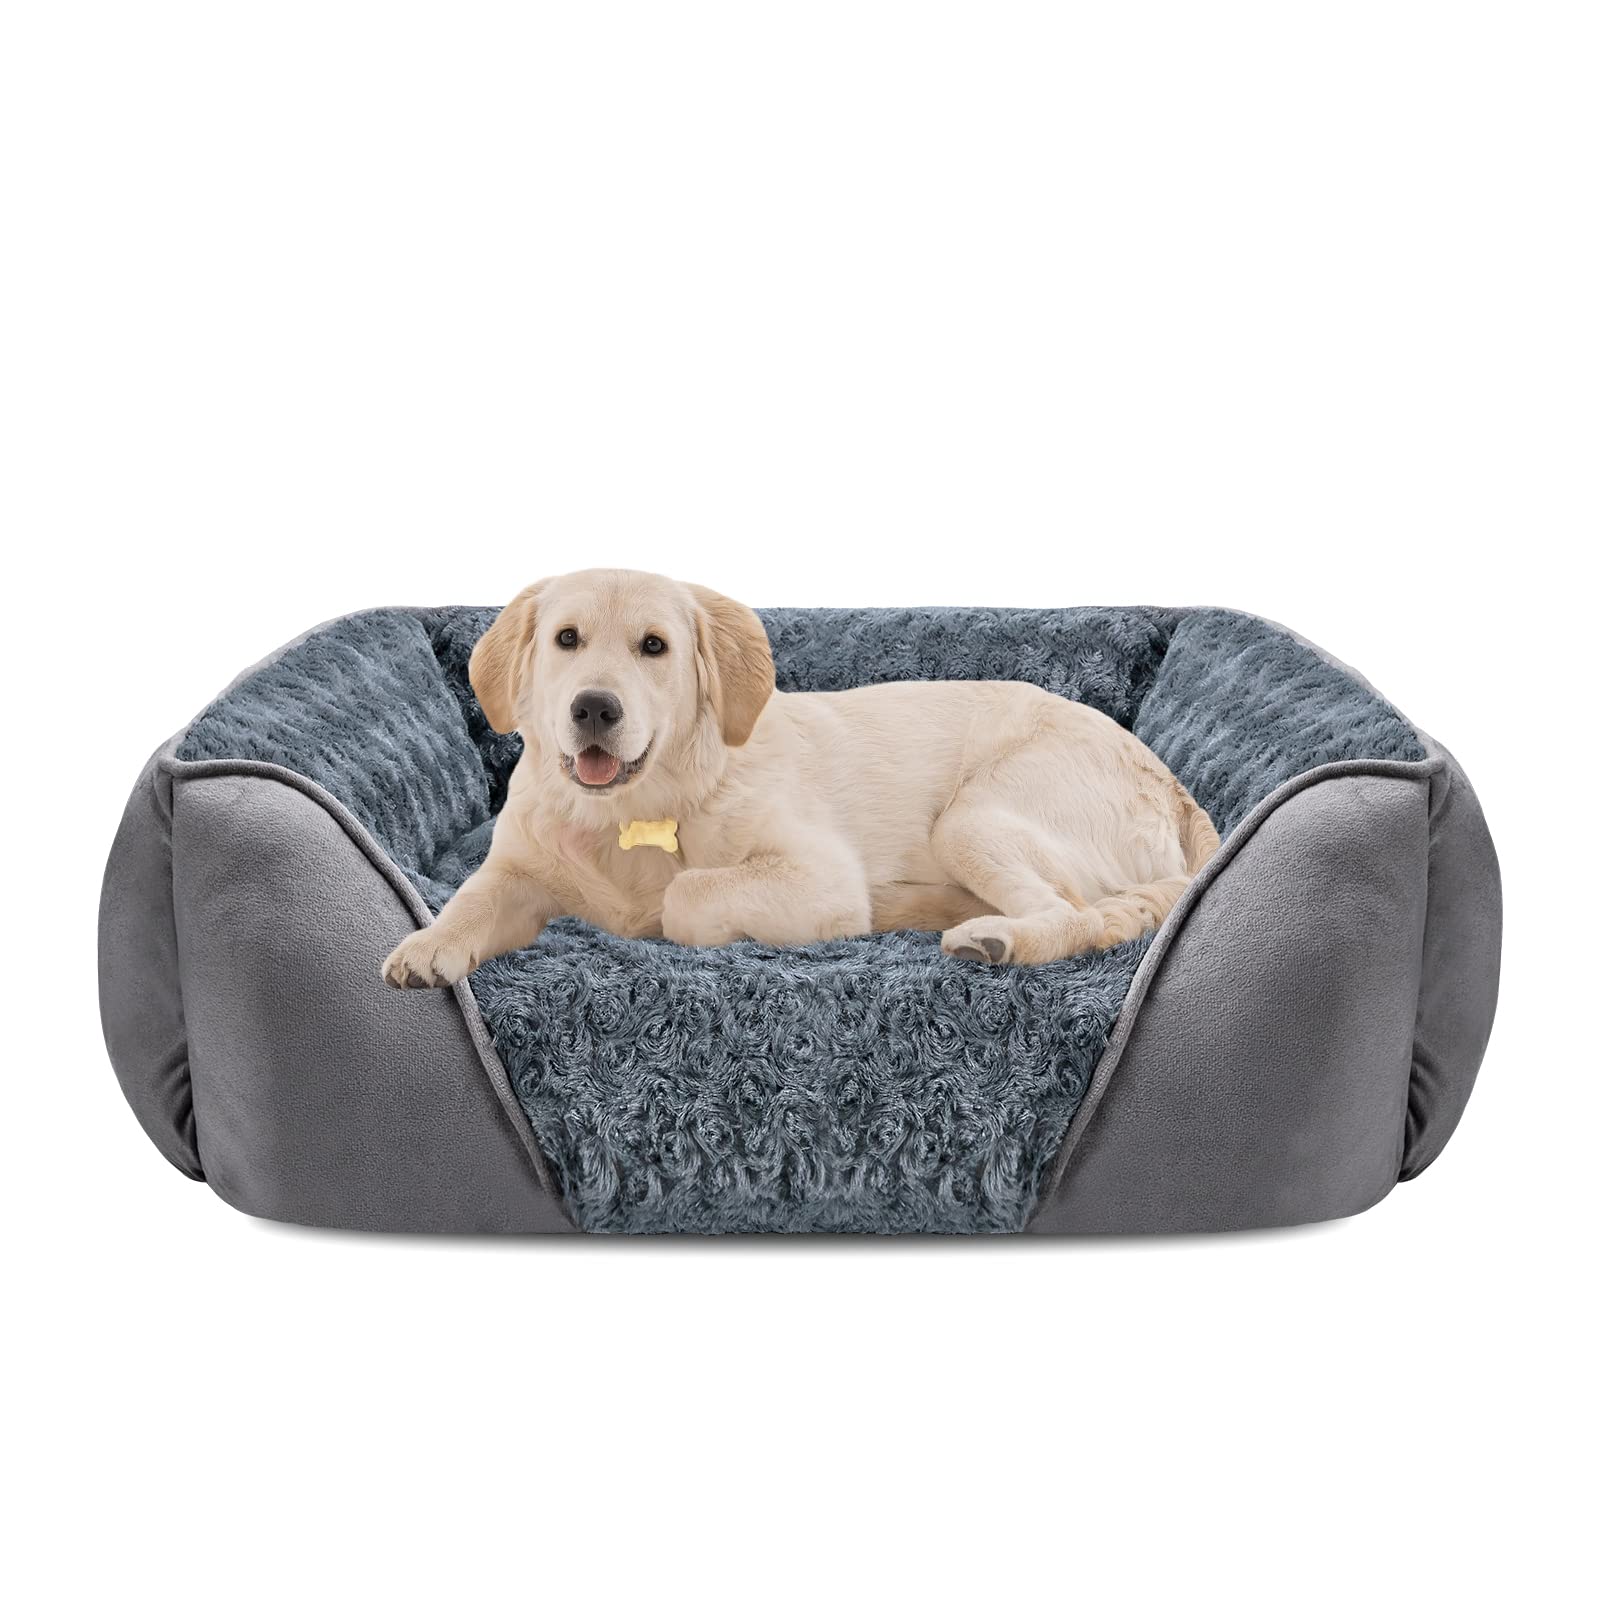 INVENHO Large Dog Bed for Large Medium Small Dogs, Rectangle Washable Dog Bed, Orthopedic Dog Bed, Soft Calming Sleeping Puppy B